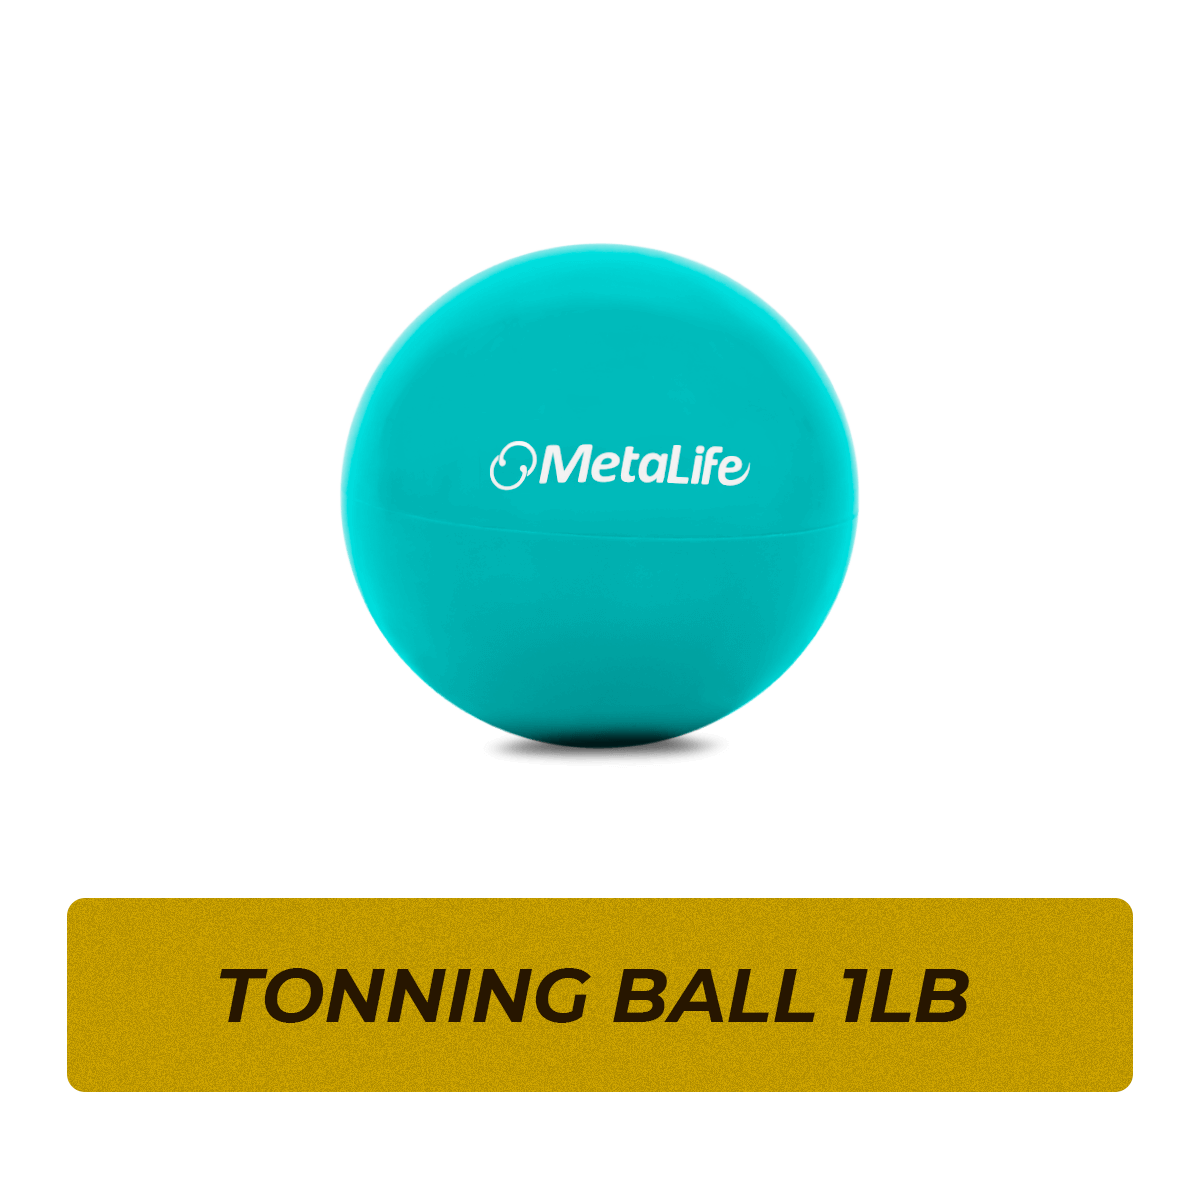 Tonning Ball 1LB